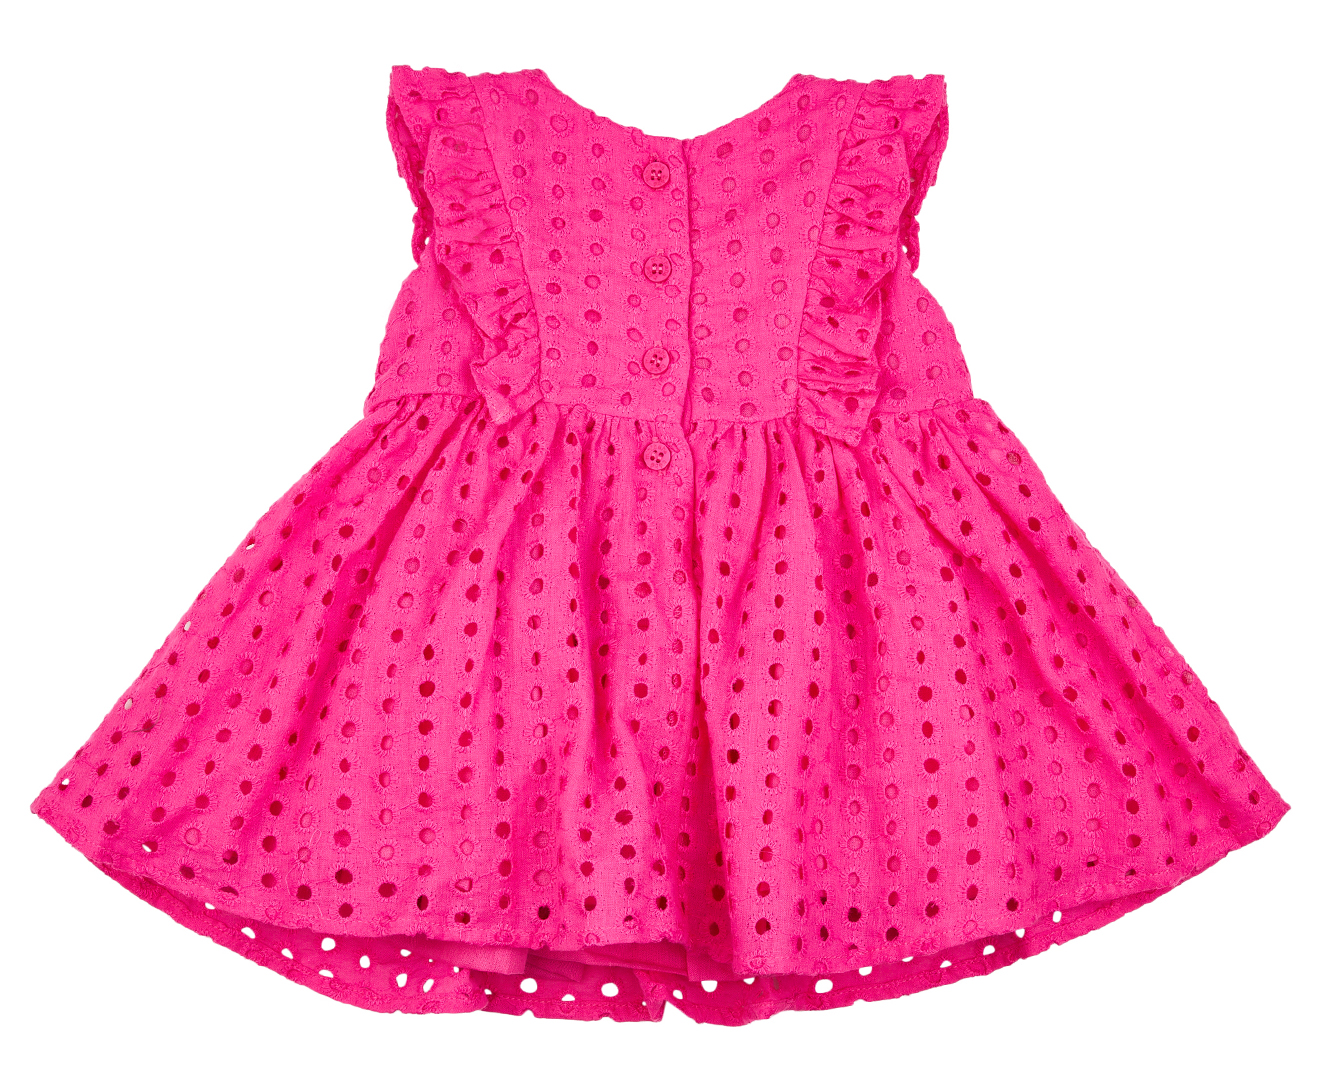 Bébé by Minihaha Baby Girls' Isla Broderie Dress - Hot Pink | Catch.com.au